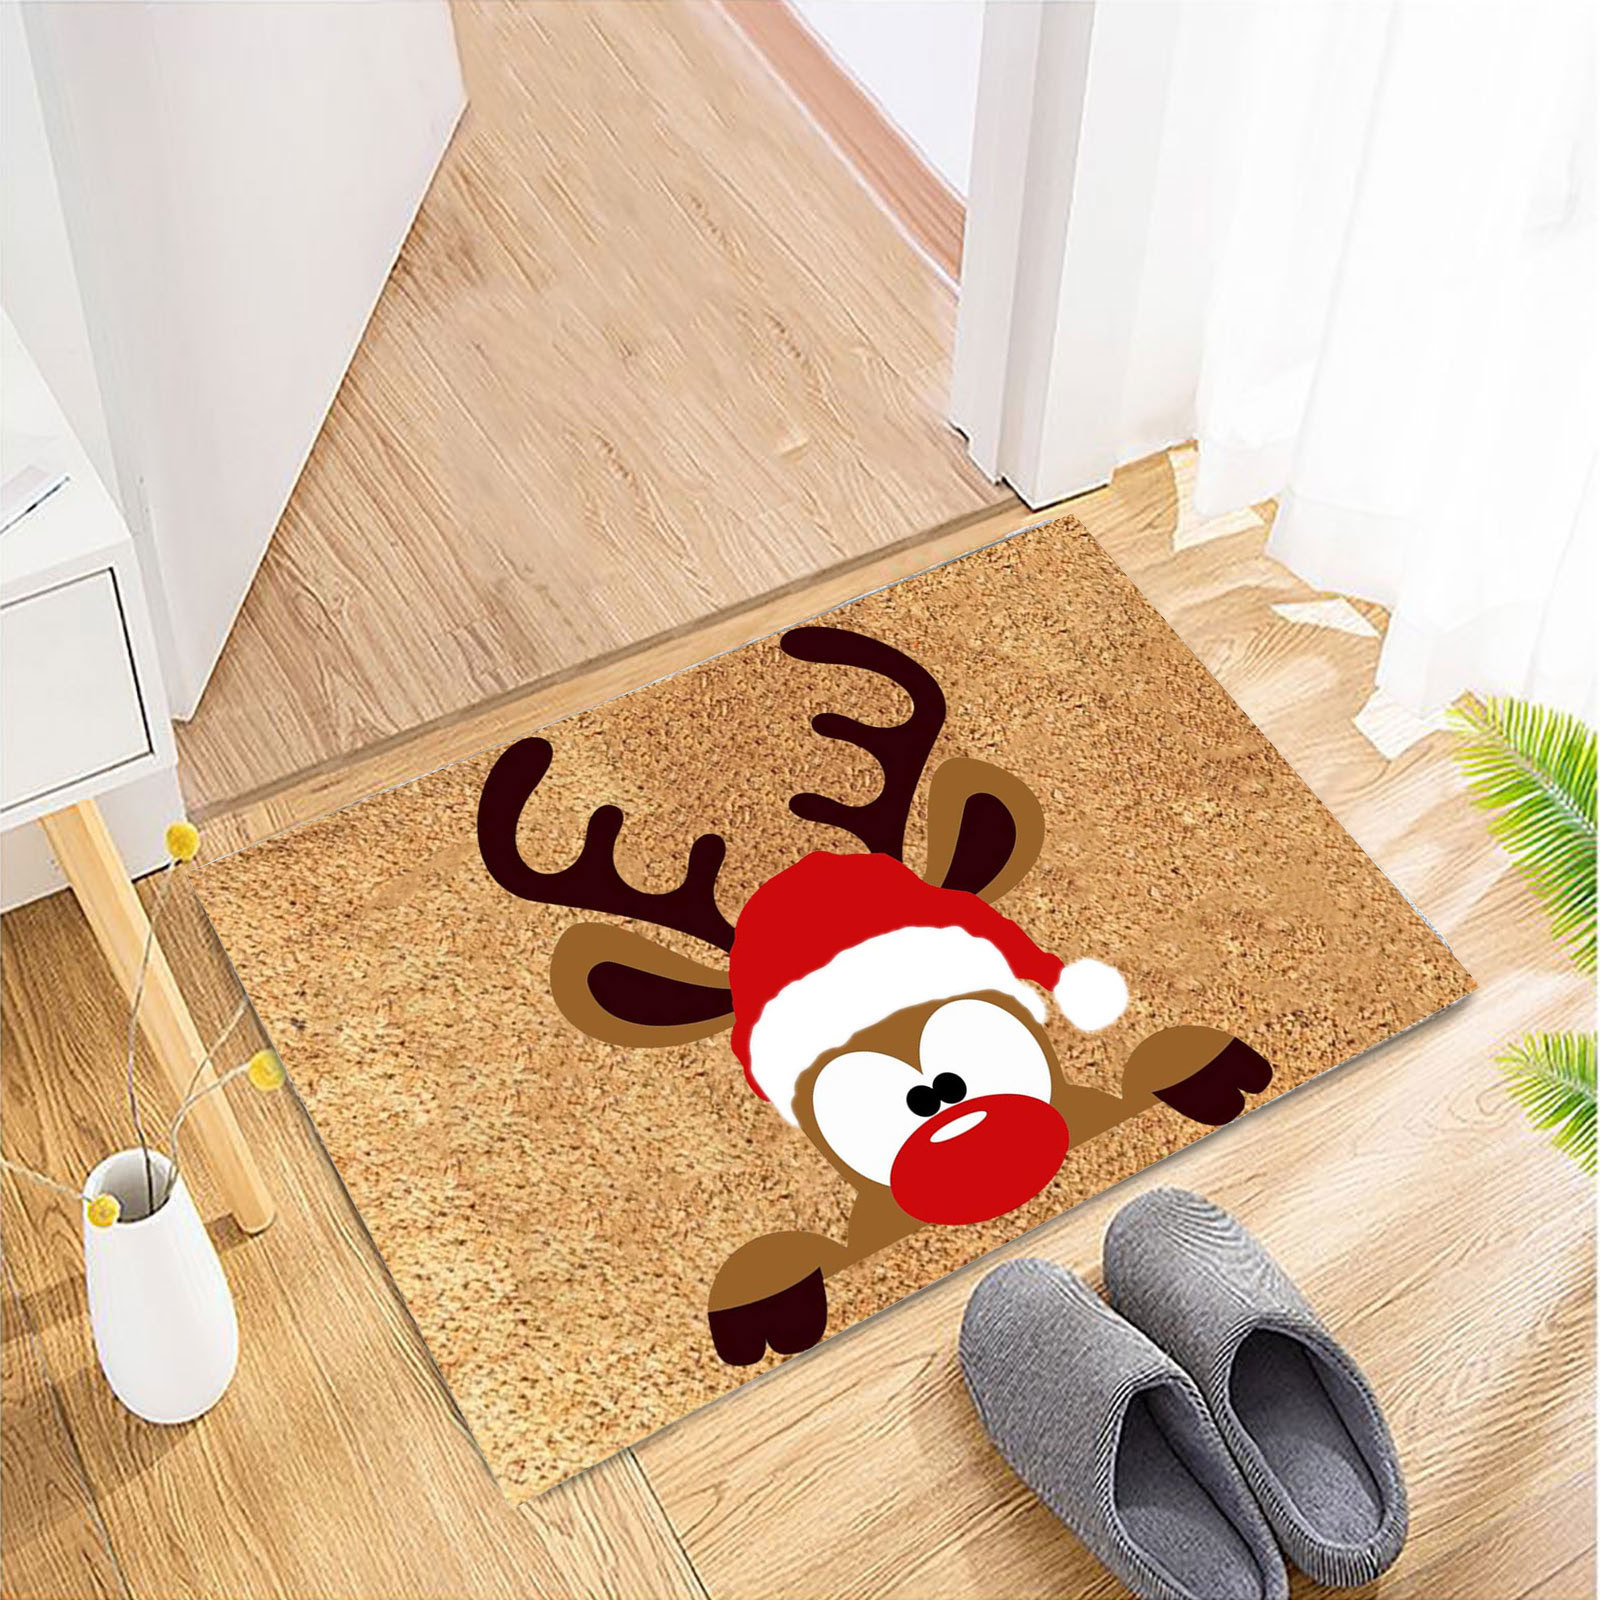 Tapijt Merry Christmas Thema Doormat keukenmatmat Xmas slaapkamer ingang woonkamer badkamer niet -slip tapijt 221007